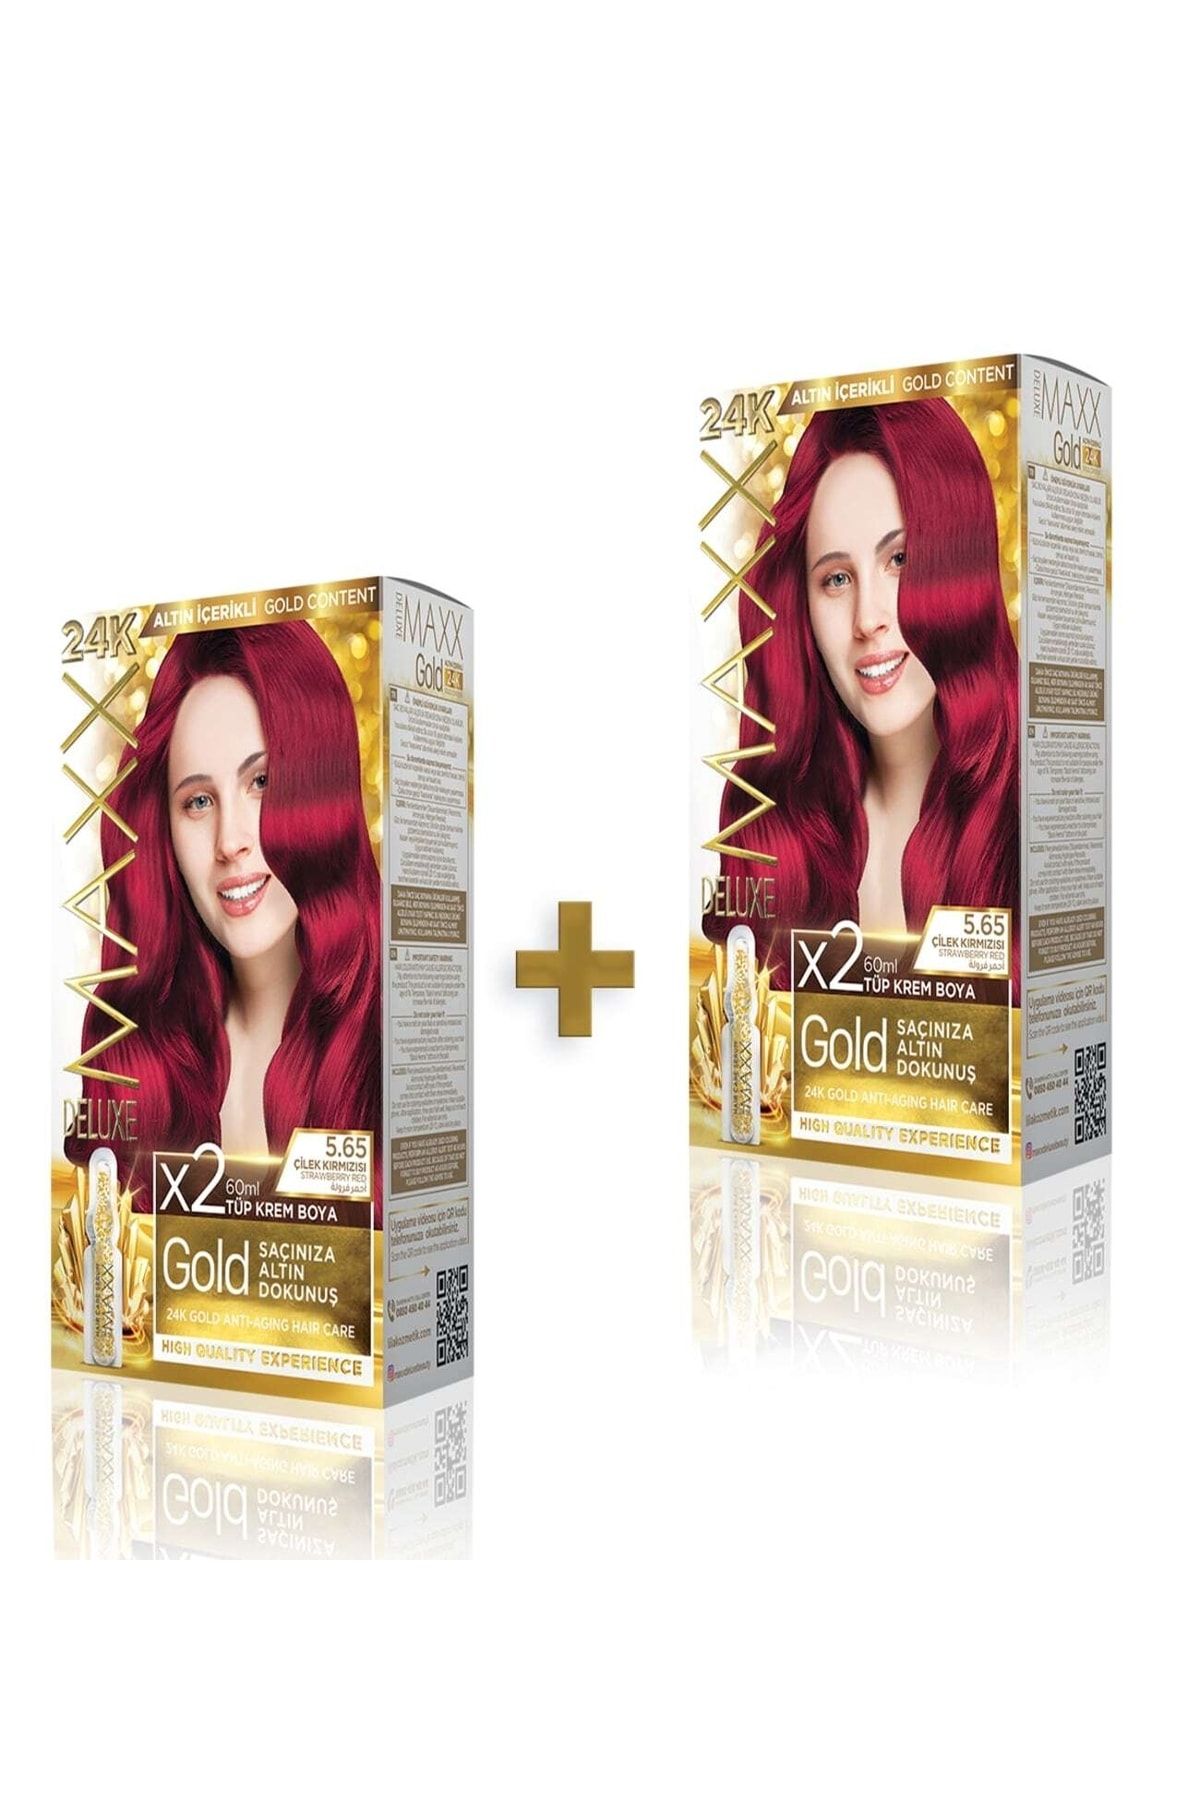 MAXX DELUXE Golden Beauty 24k 5.65 Çilek Kırmızısı Boya Seti 2 Adet